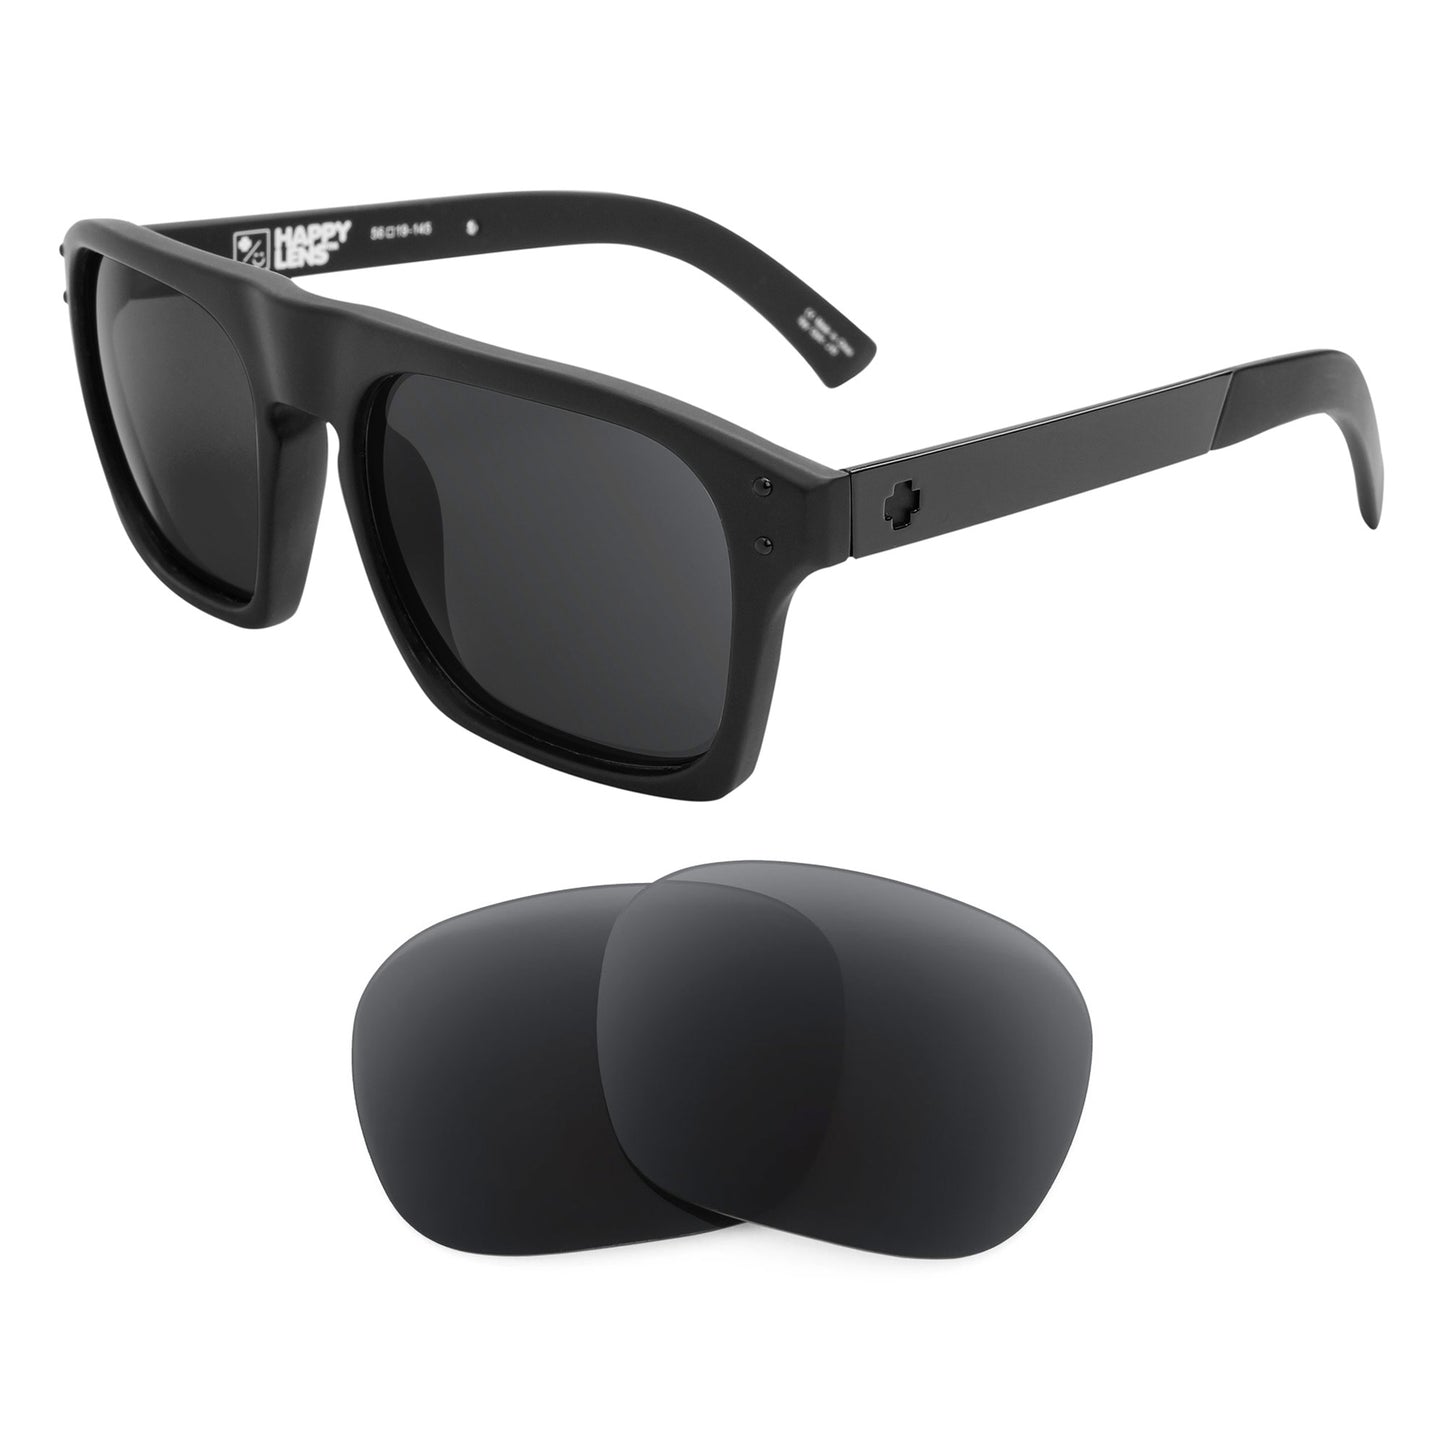 Spy Optic Balboa sunglasses with replacement lenses